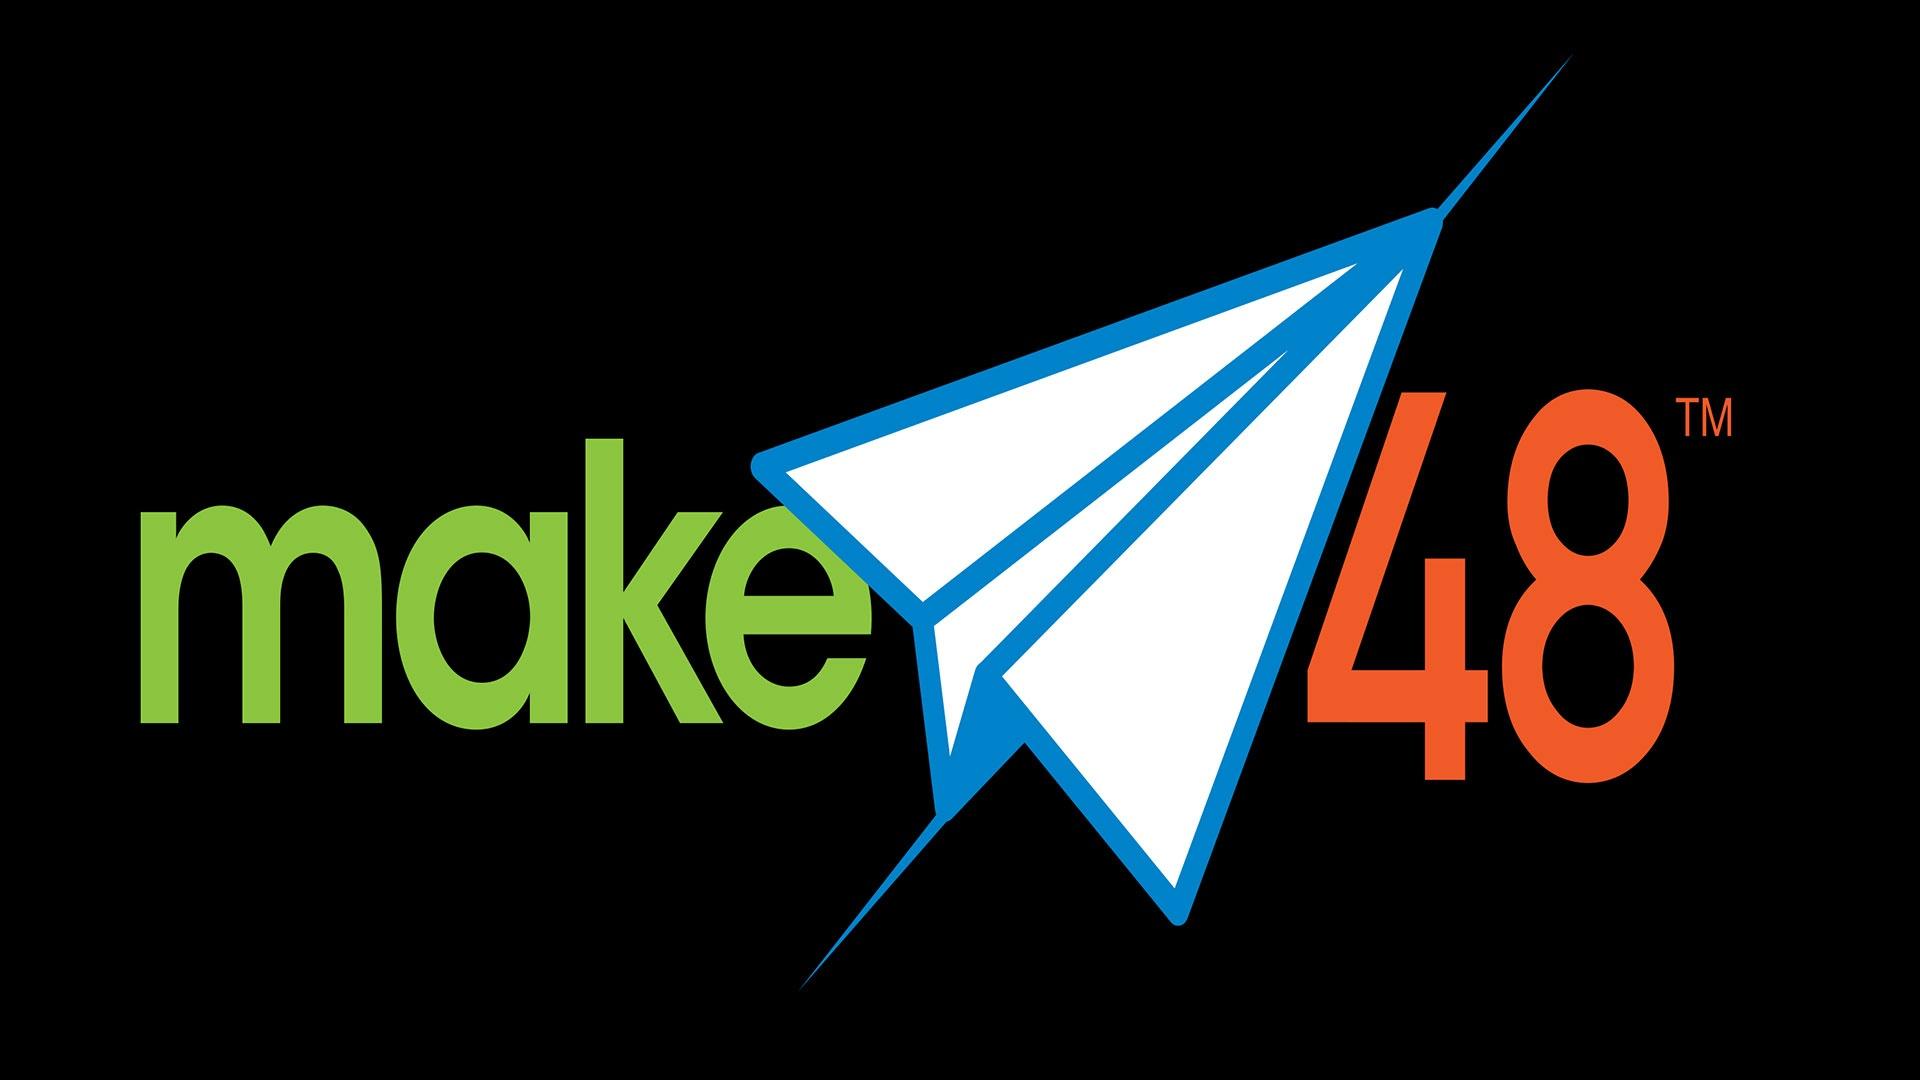 The Stanley Black Decker Makerspace hosted Make48 last weekend 